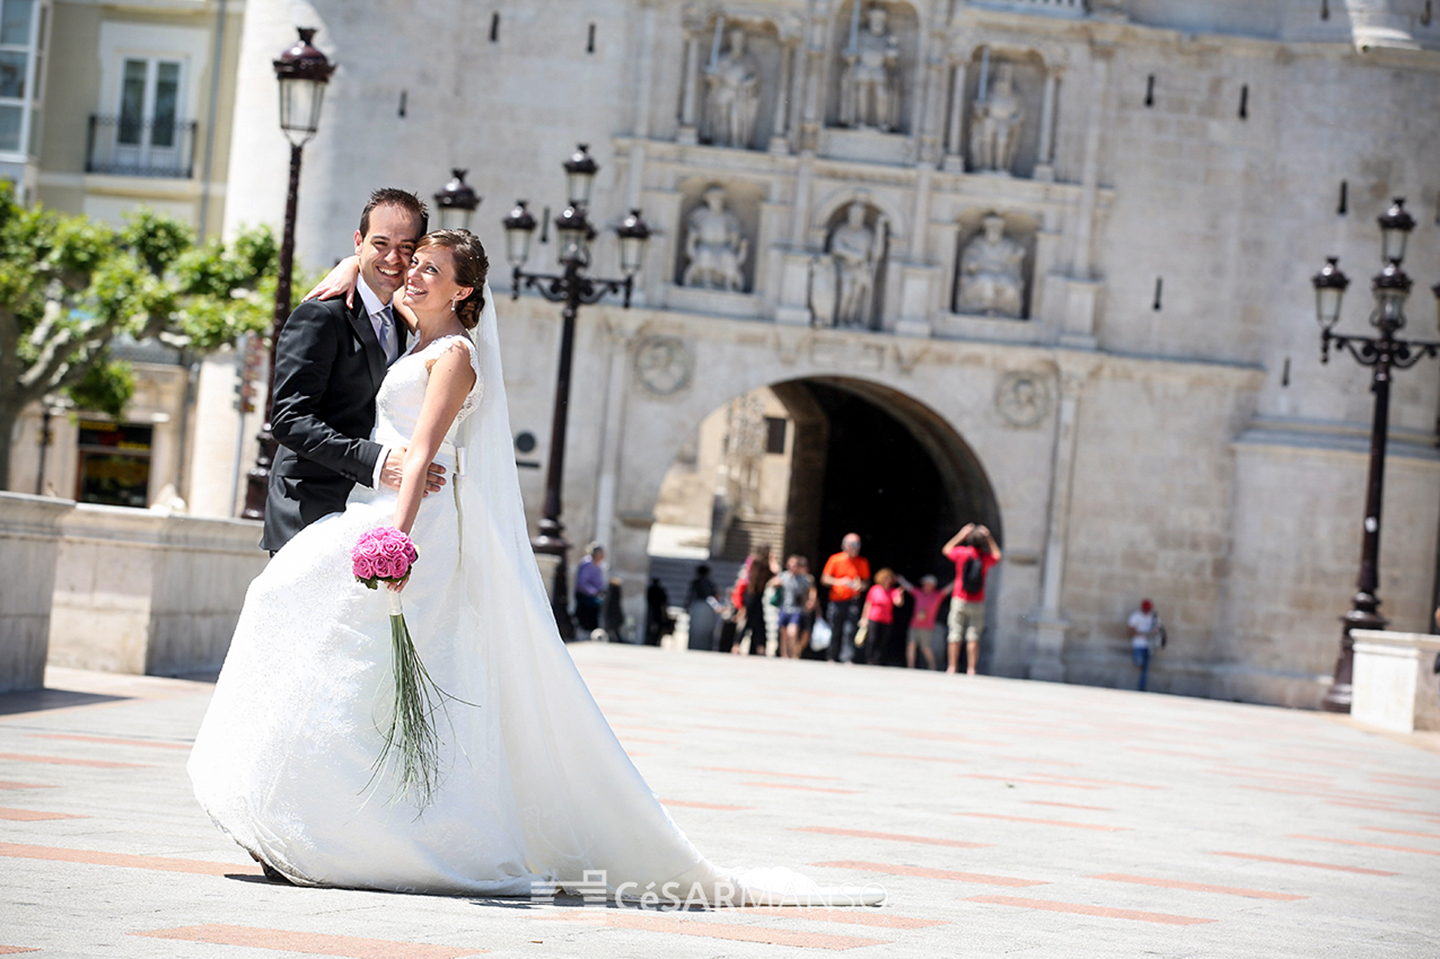 César Manso Fotógrafo: Fotógrafos de boda en Burgos - Boda%20AlejandrayJairo-21.JPG